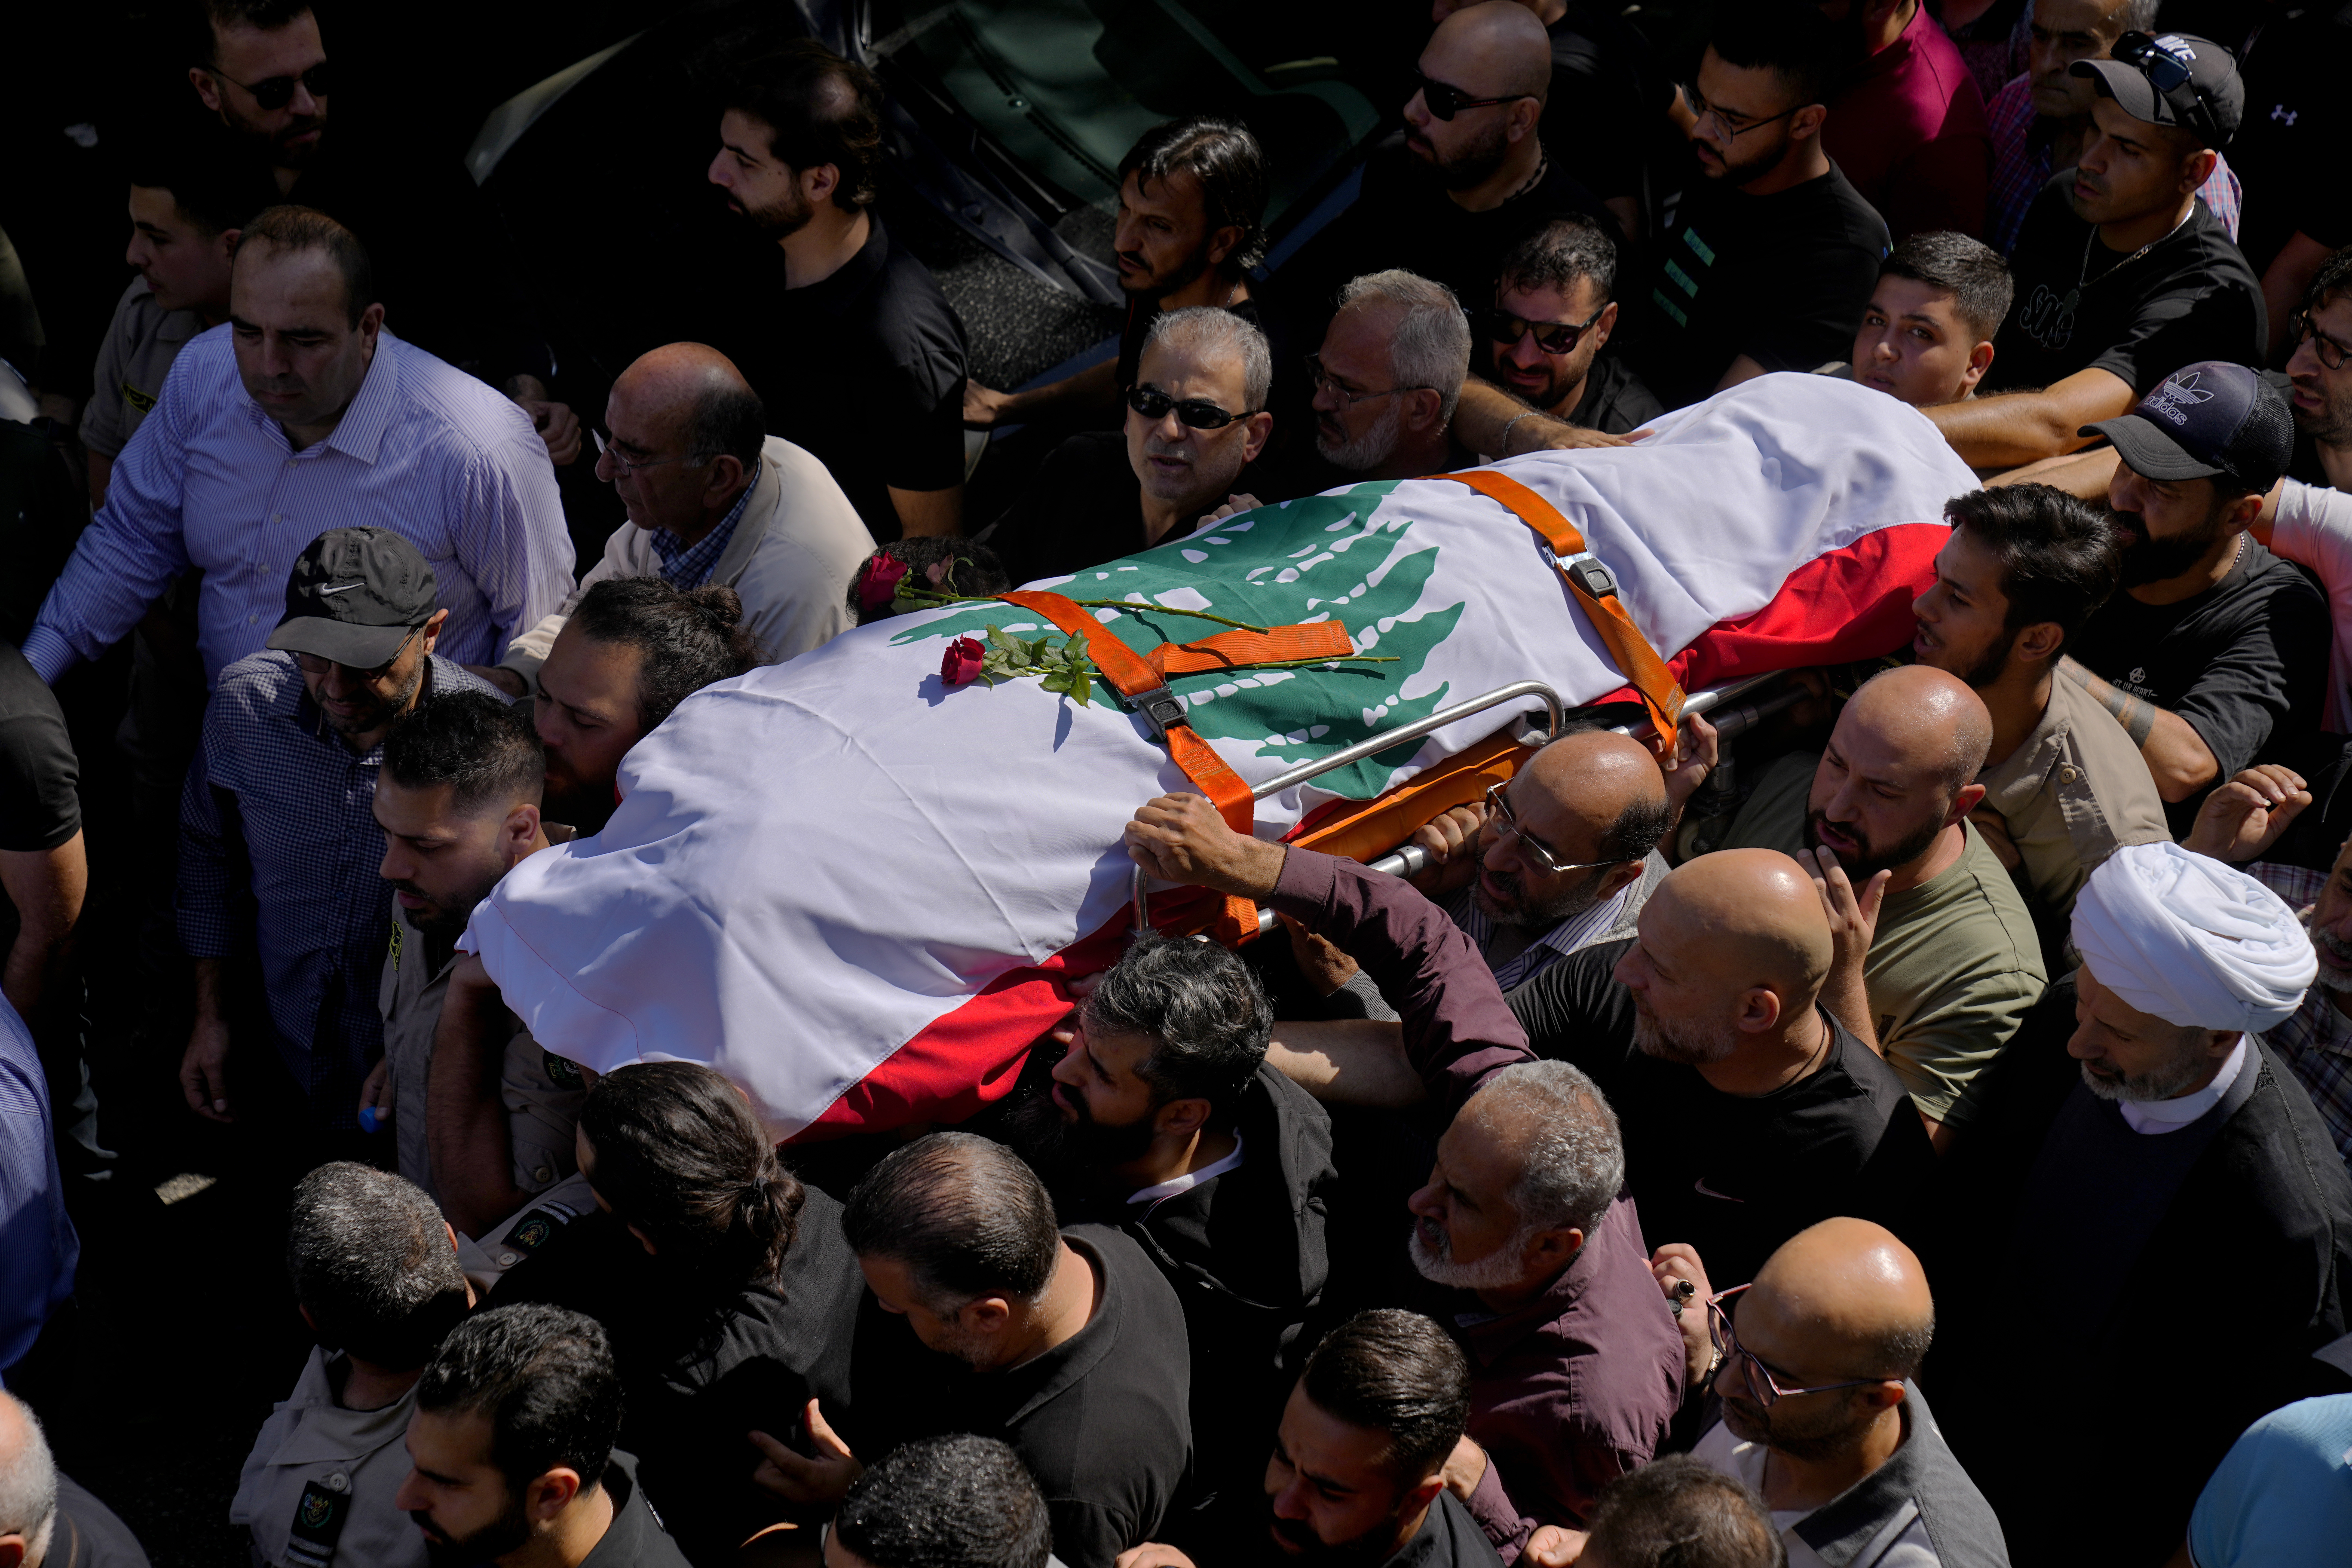 At-Taweel Family Massacred in Israeli Sudden Attack